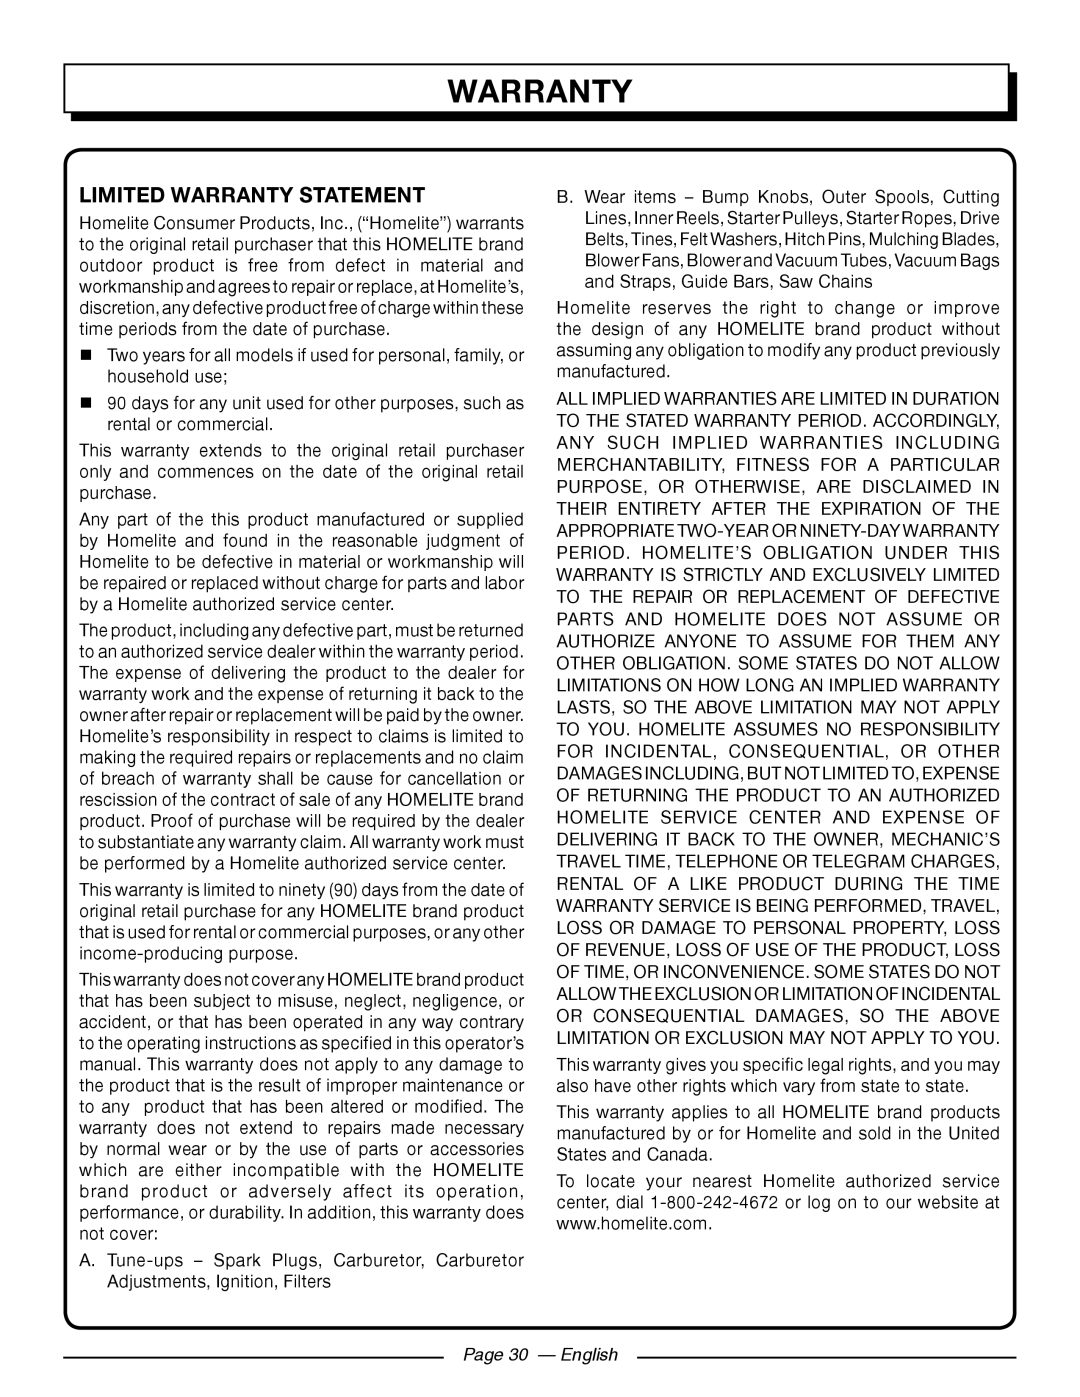 Homelite UT43122, UT43102 manuel dutilisation Limited Warranty Statement, Page 30 - English 